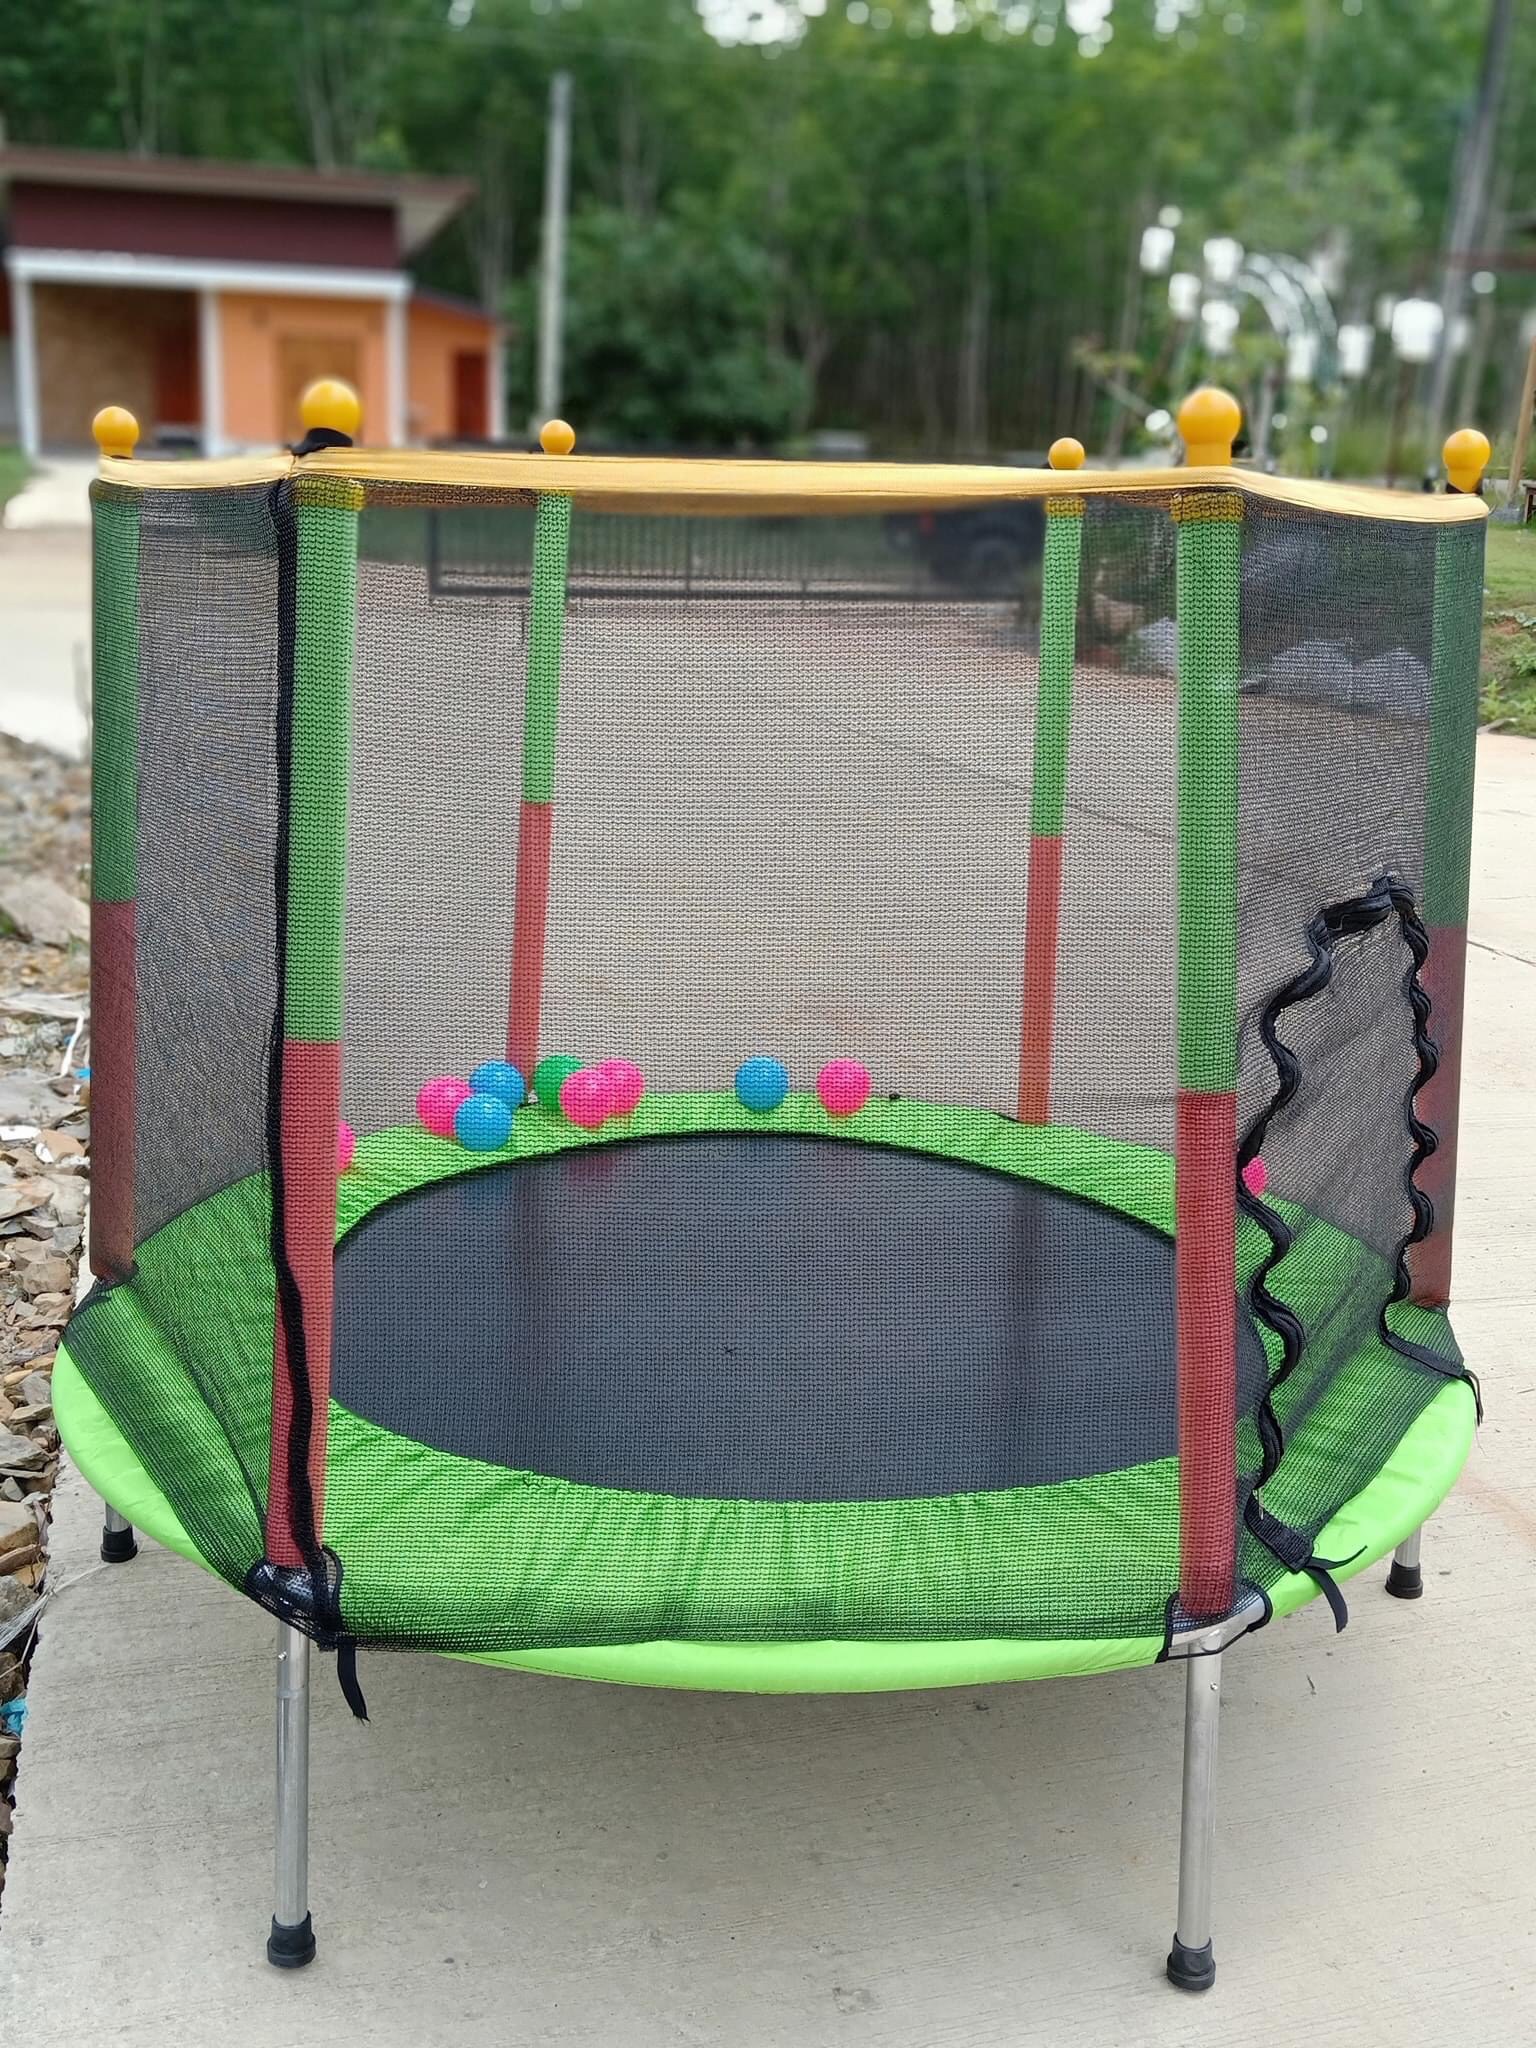 Toykidsshop แทรมโพลีนสำหรับเด็กกระโดดเล่น Trampoline jump หรือออกกำลังกาย (ขนาด 122 x 140 ซม.)